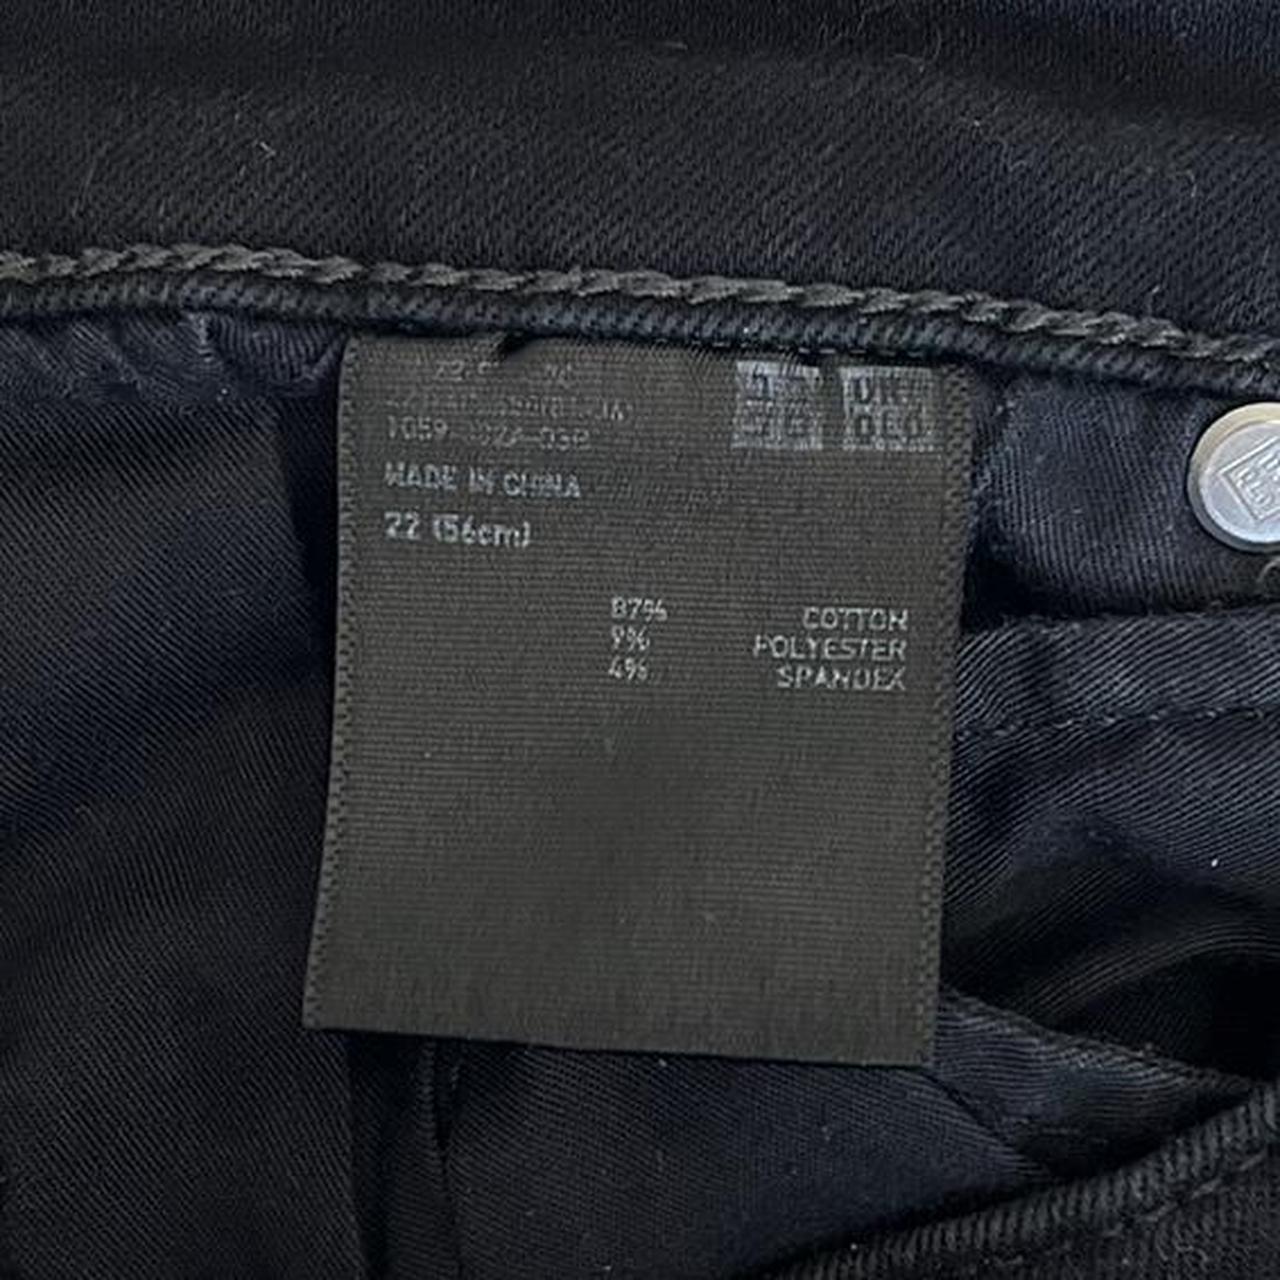 UNIQLO skinny ripped jeans in black! Size 22 (56cm) - Depop